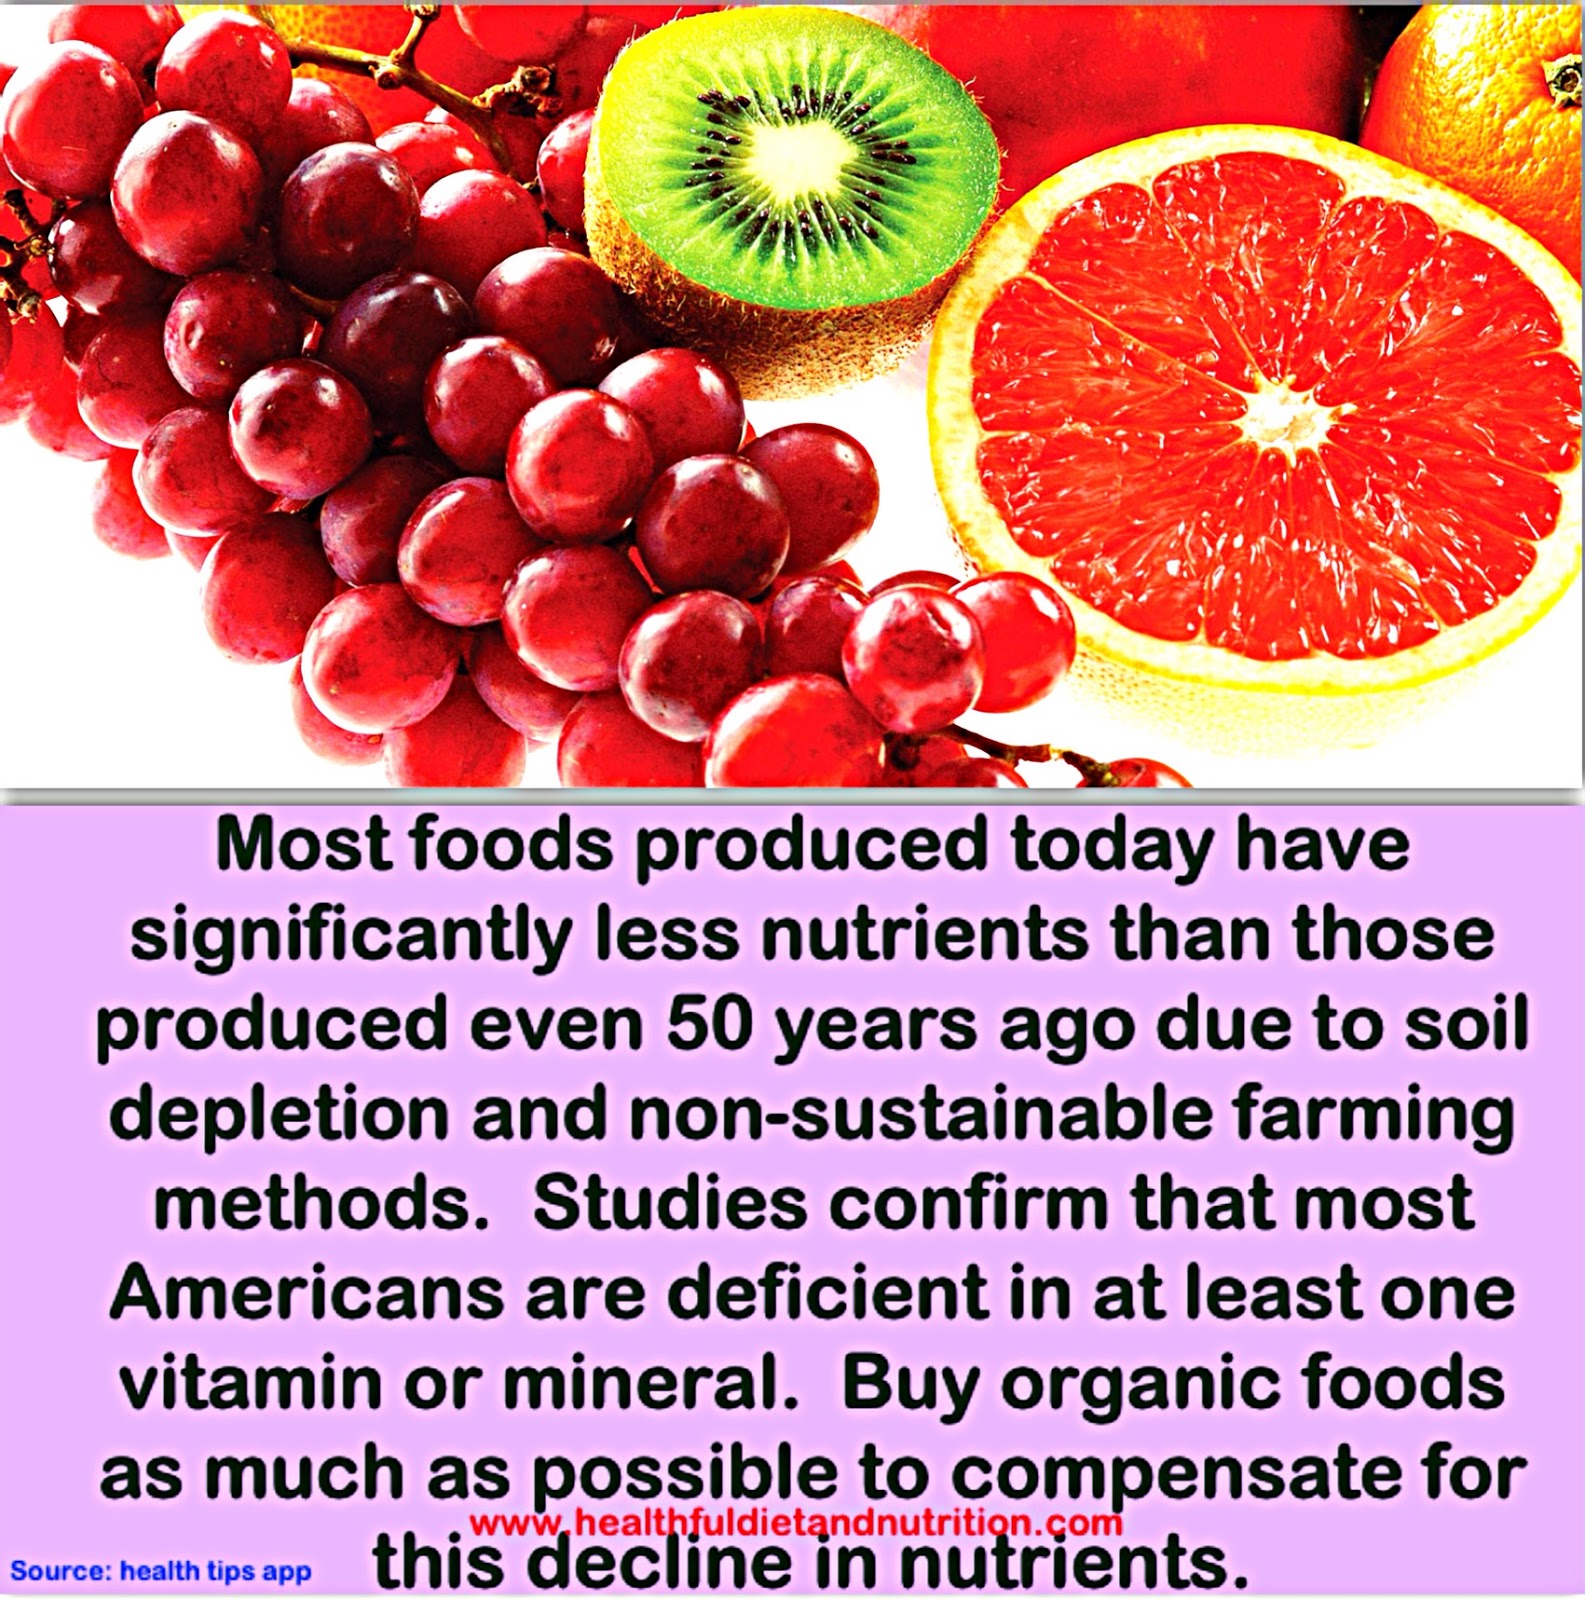 Buy Organic Foods